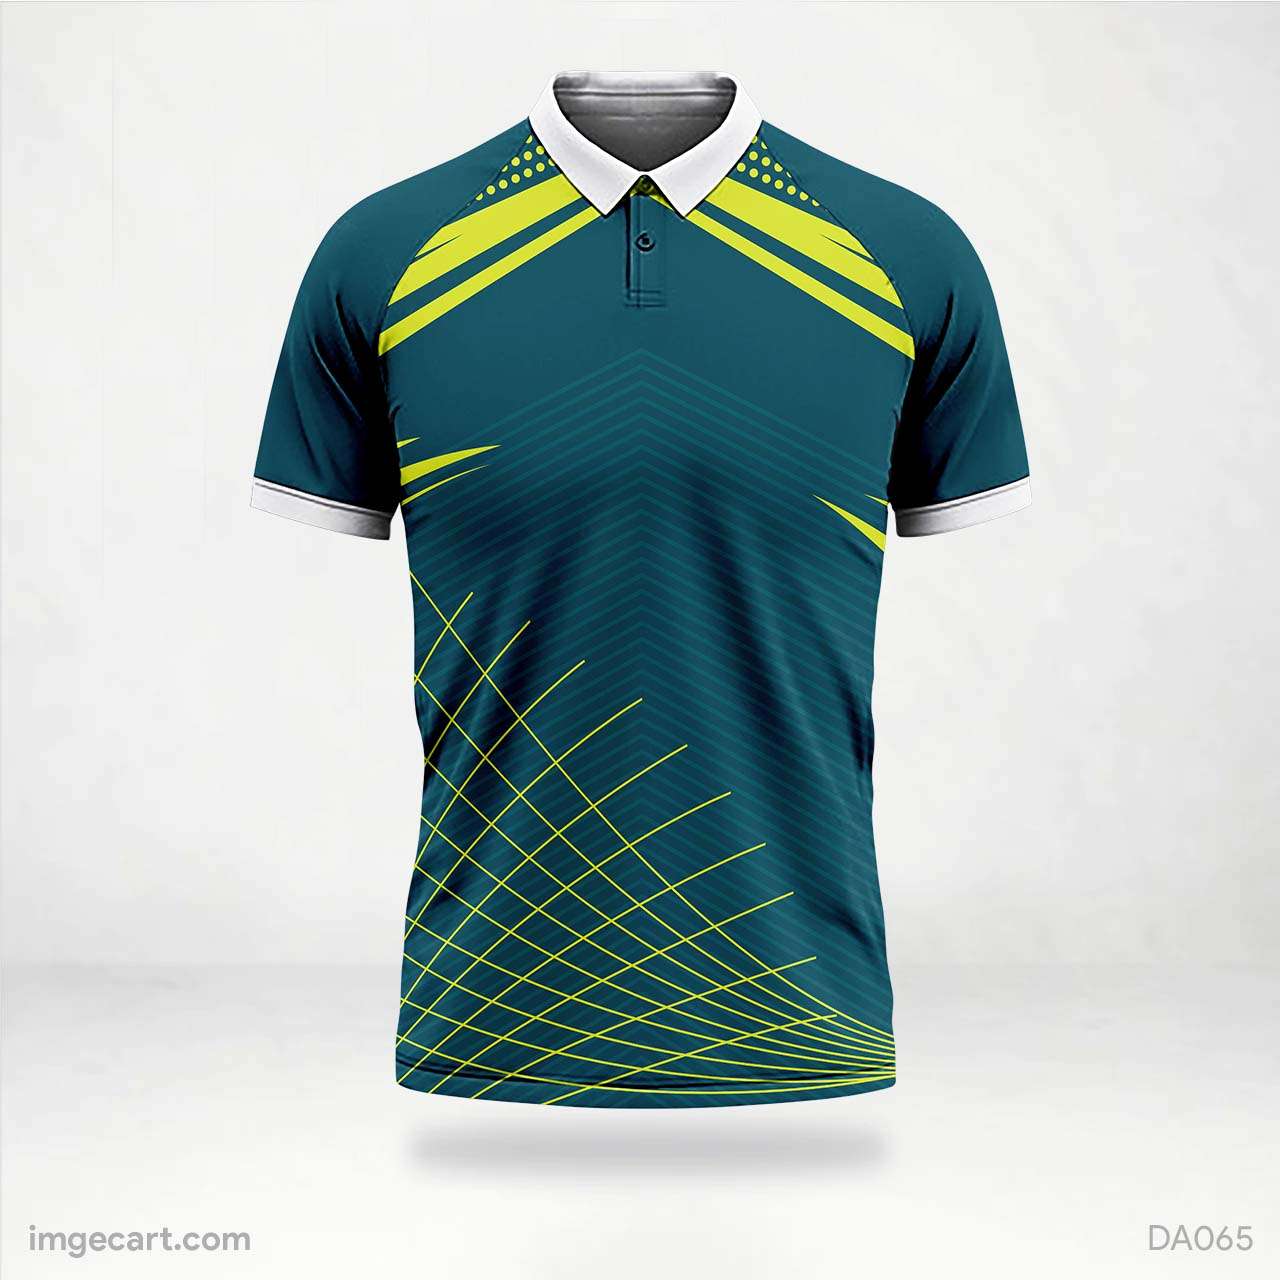 Cricket Jersey Design Green with Yellow Effect - imgecart